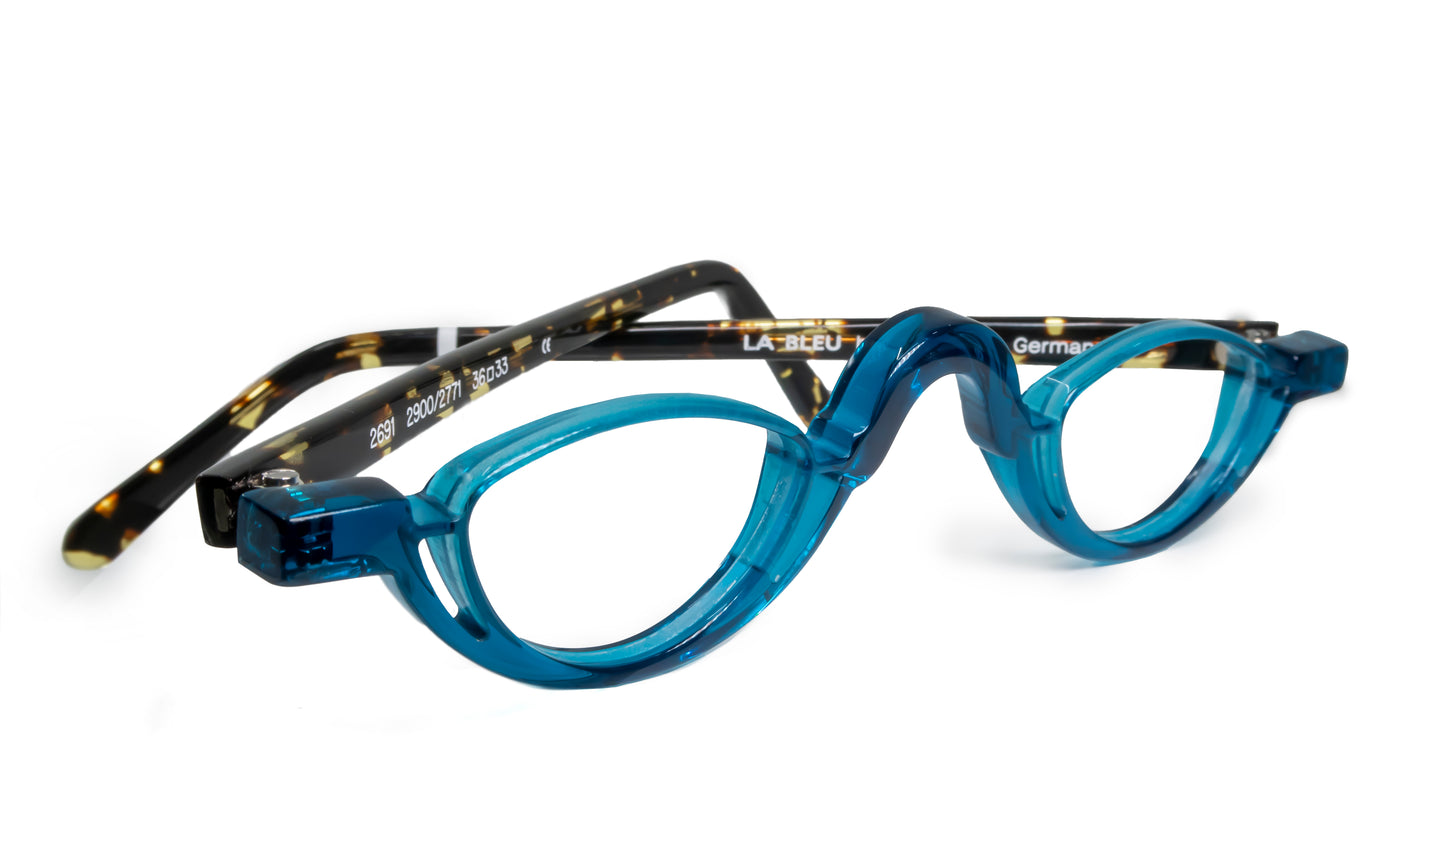 Oval 2691 by La Bleu Frames Glasses